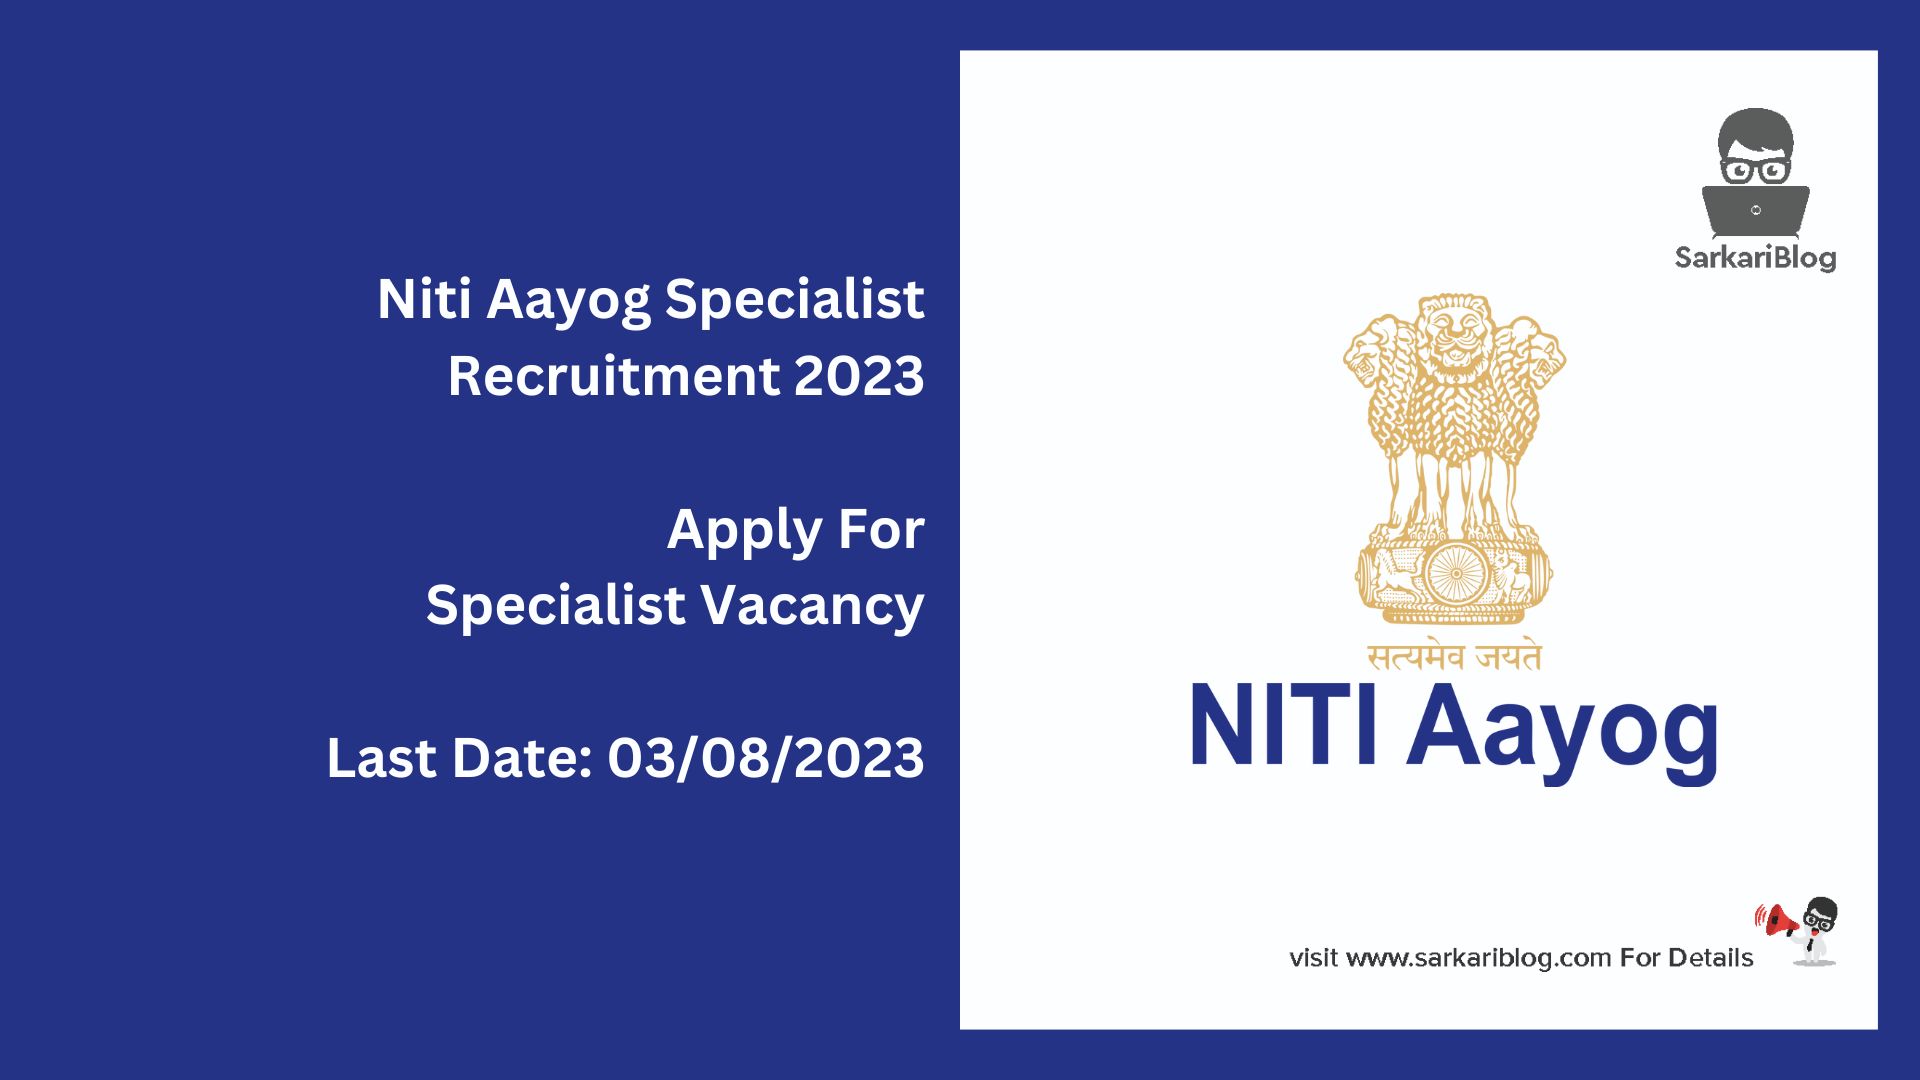 Niti Aayog Specialist Recruitment 2023